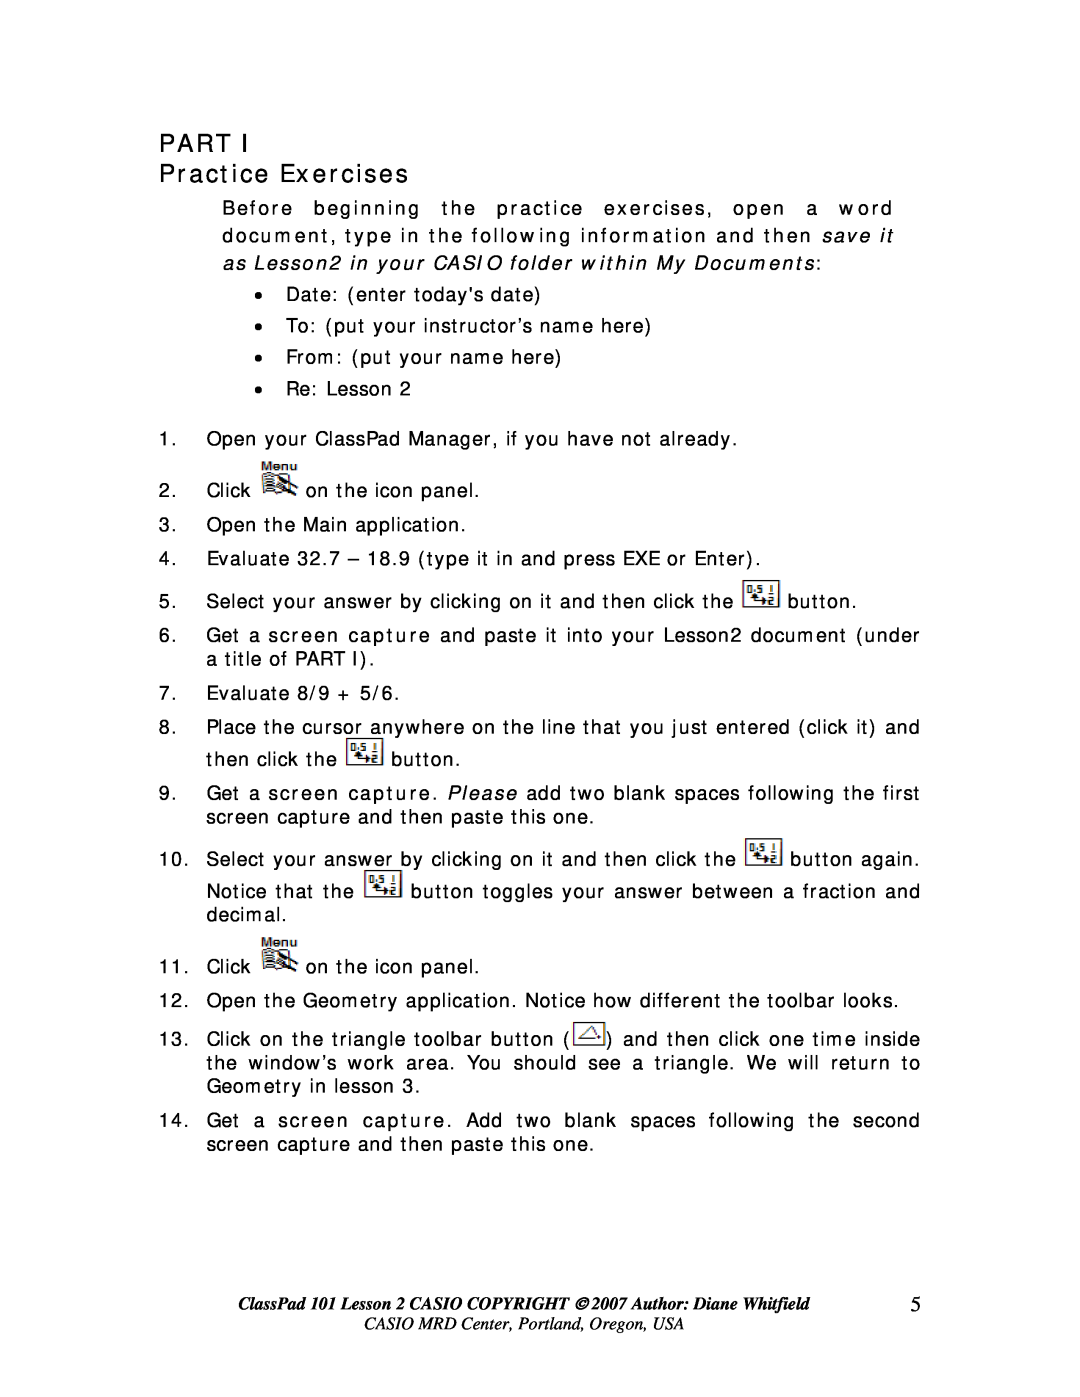 AB Soft 101 manual PART Practice Exercises 